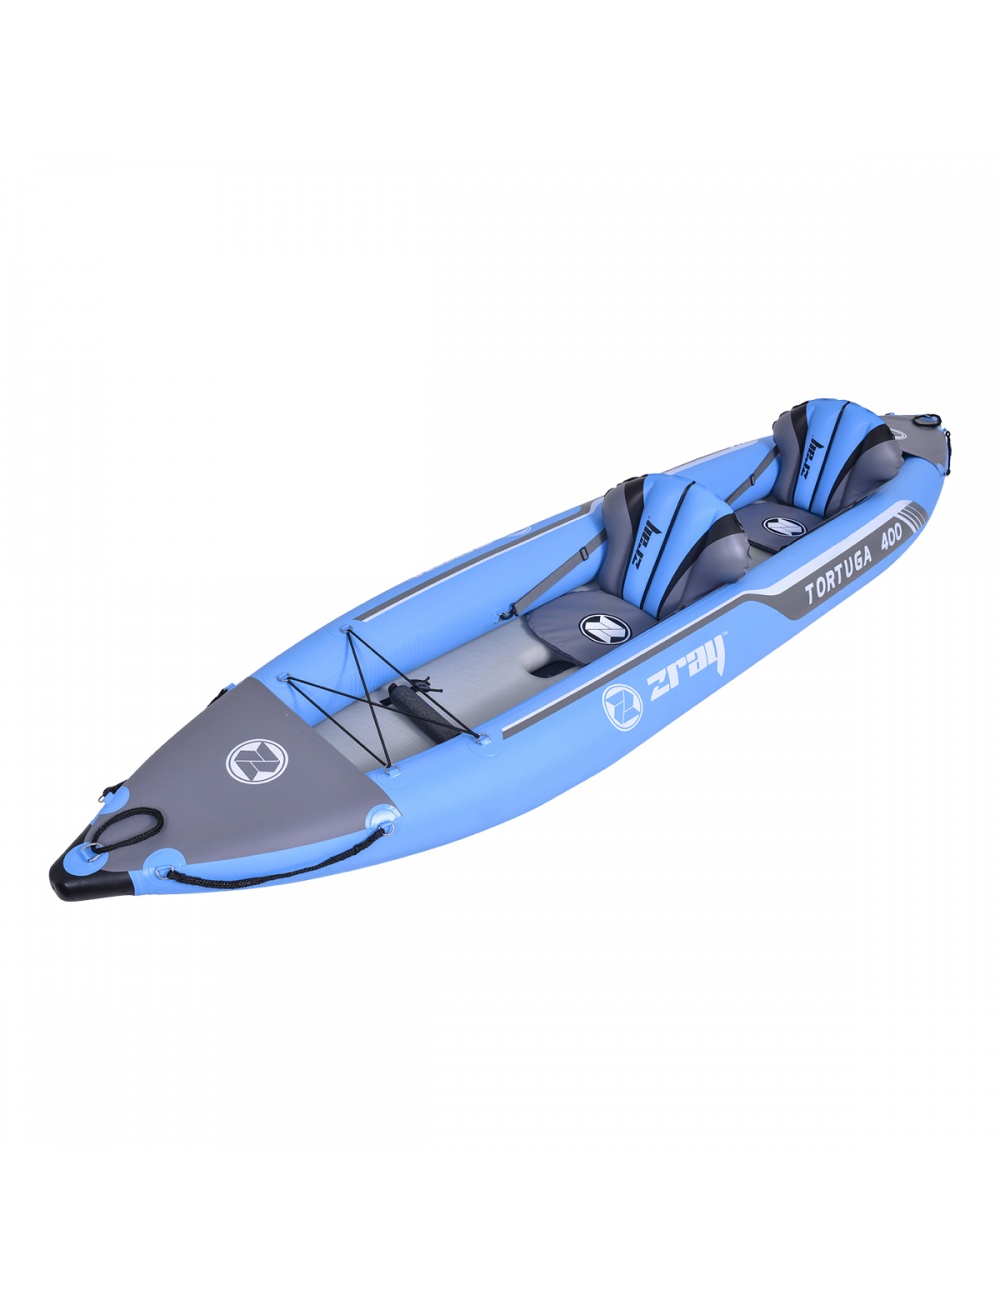 Nuevo Kayak Hinchable Zray Tortuga 400 Modelo 2021 - azul_oscuro - Zray  MKP